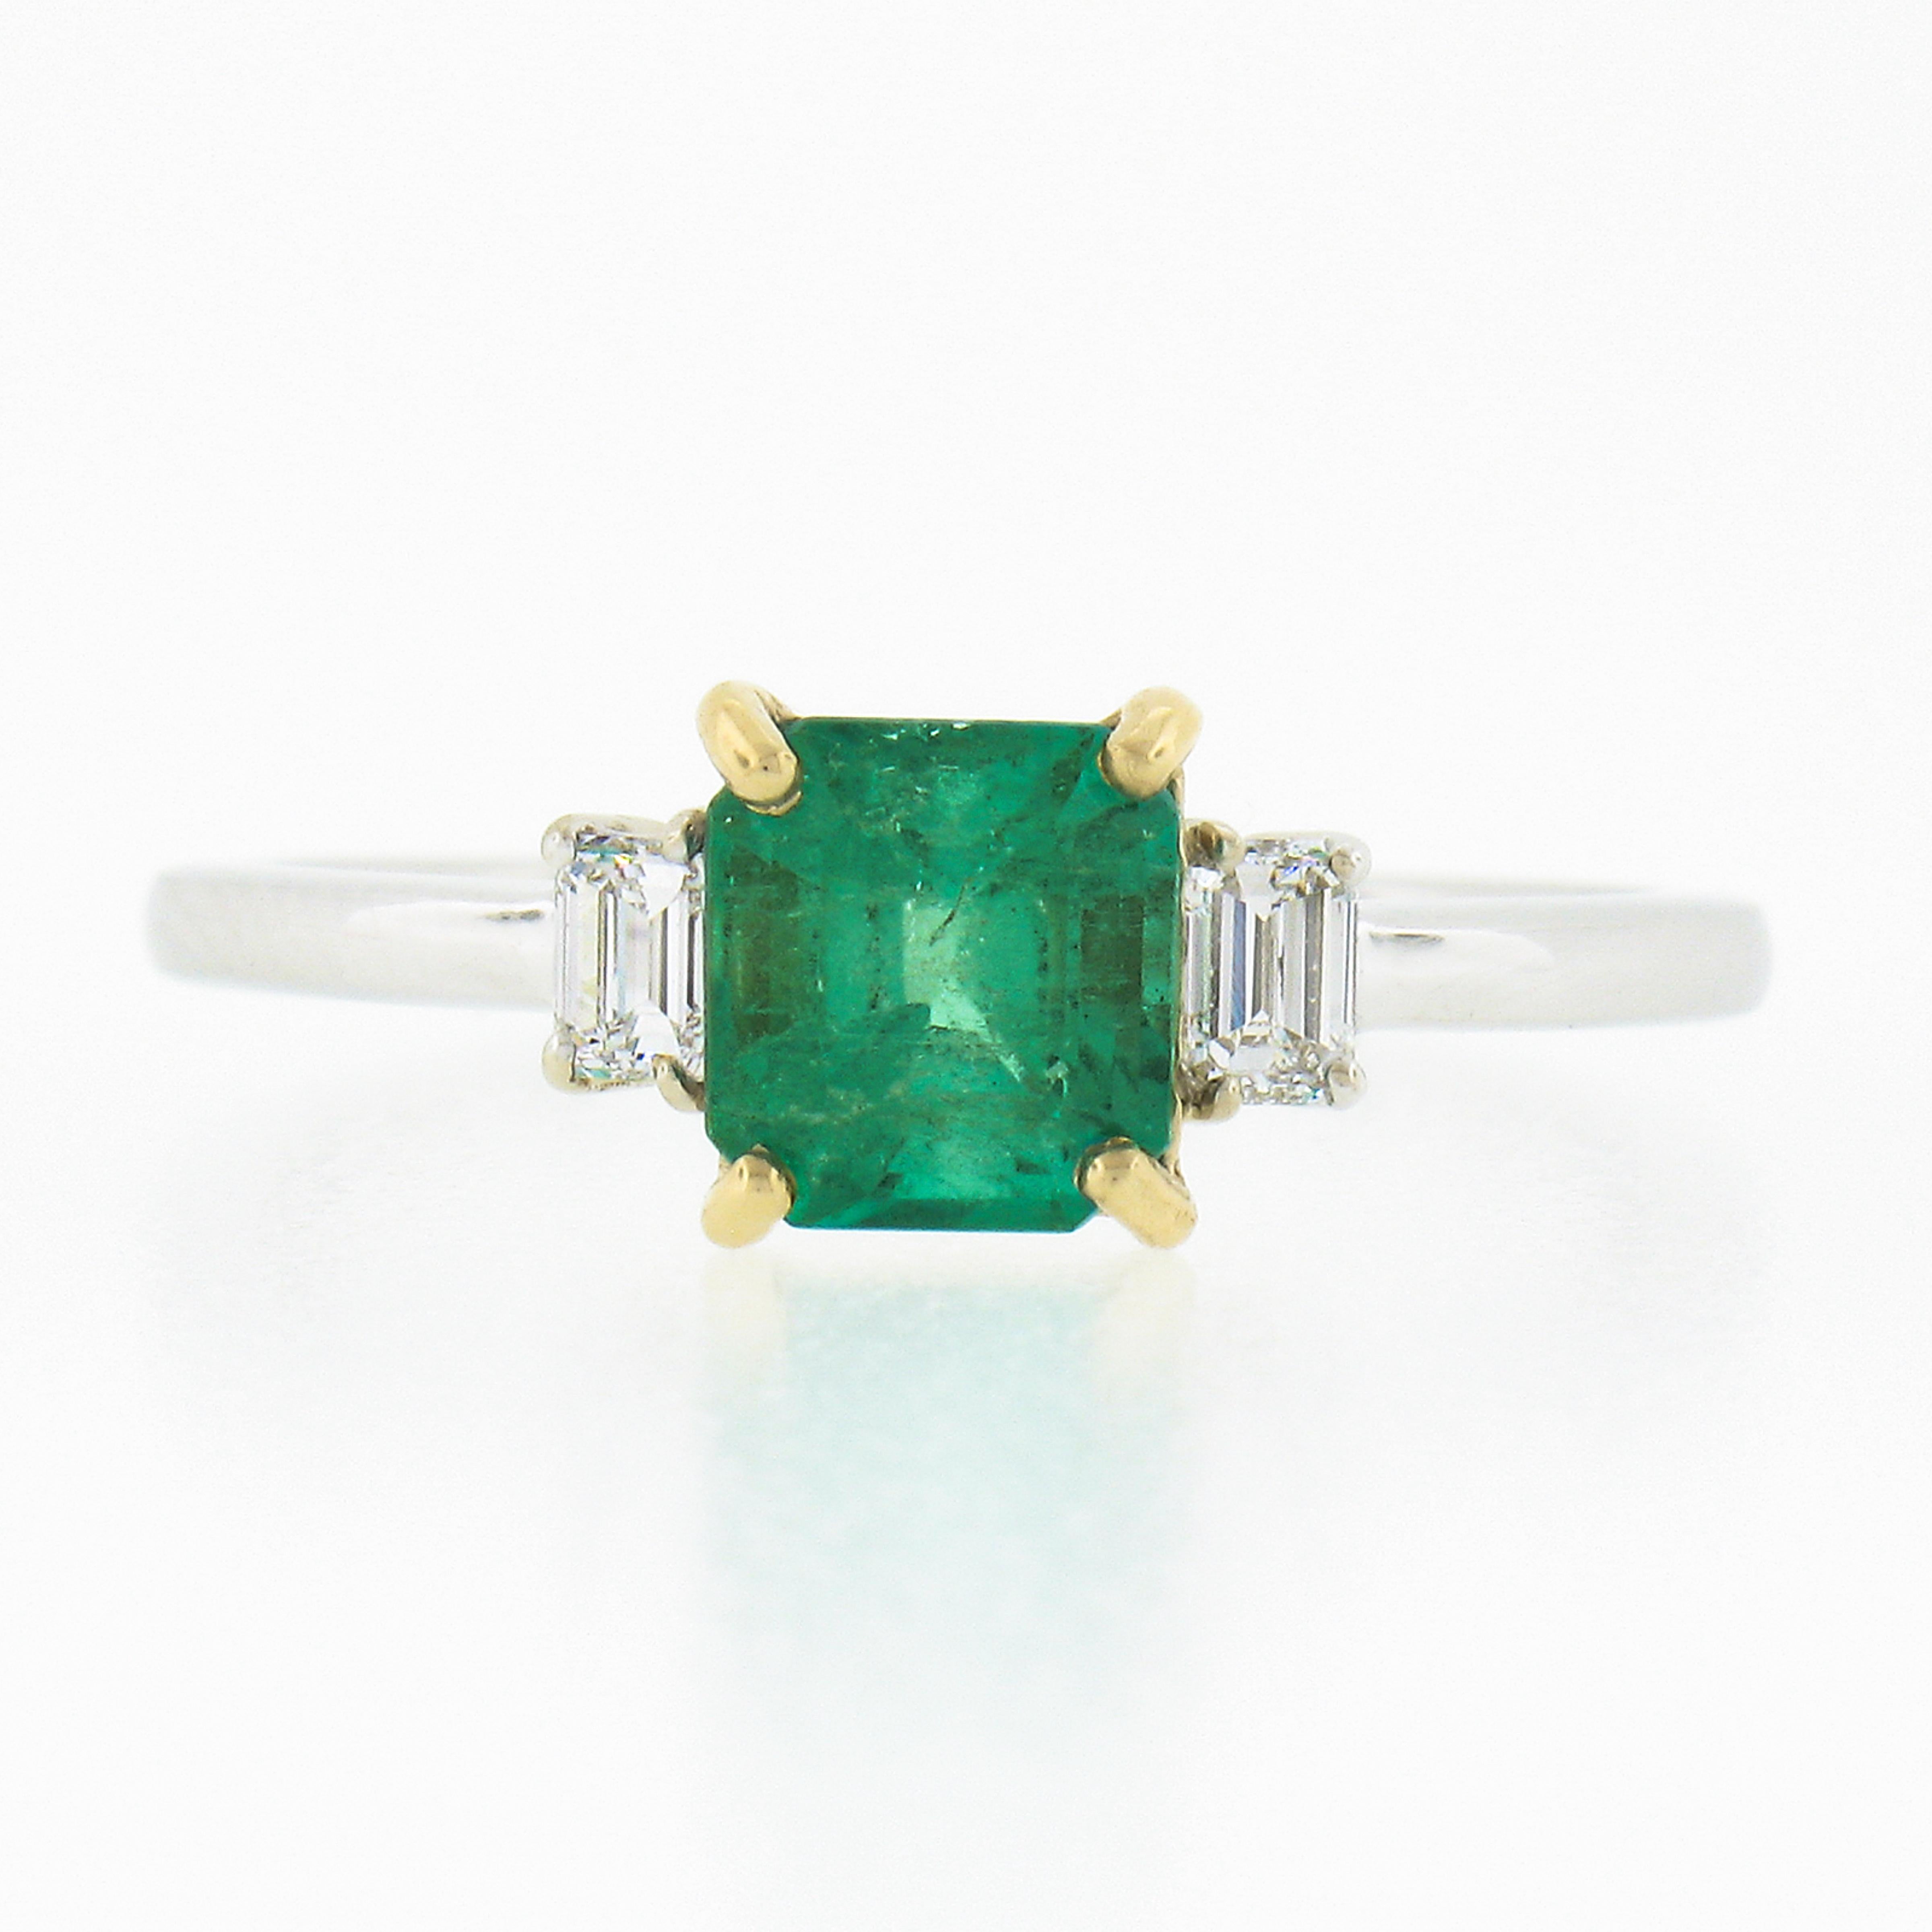 NEU 18 Karat TT Gold 1,05 Karat Smaragdschliff kolumbianischer Smaragd mit Diamant-Akzenten Ring